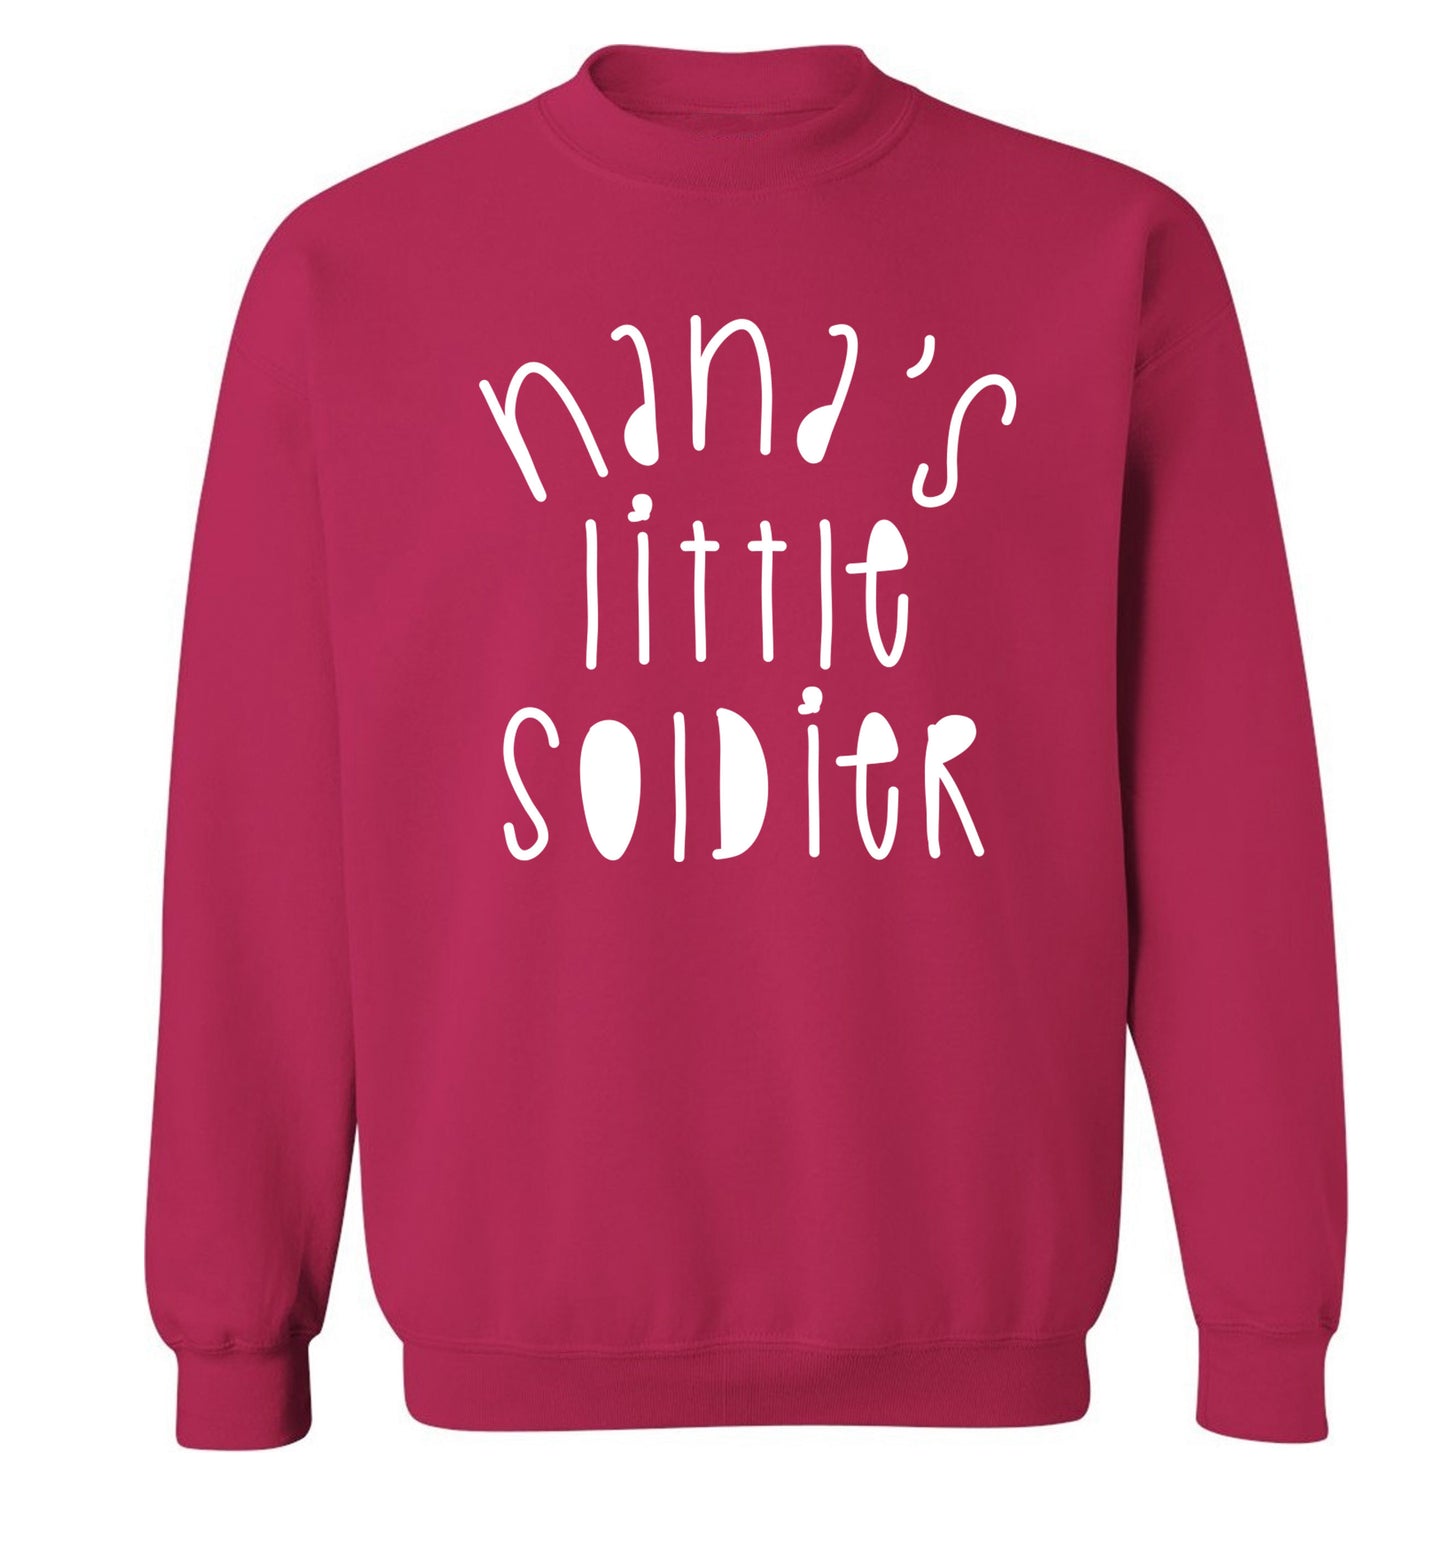 Nana's little soldier Adult's unisex pink Sweater 2XL